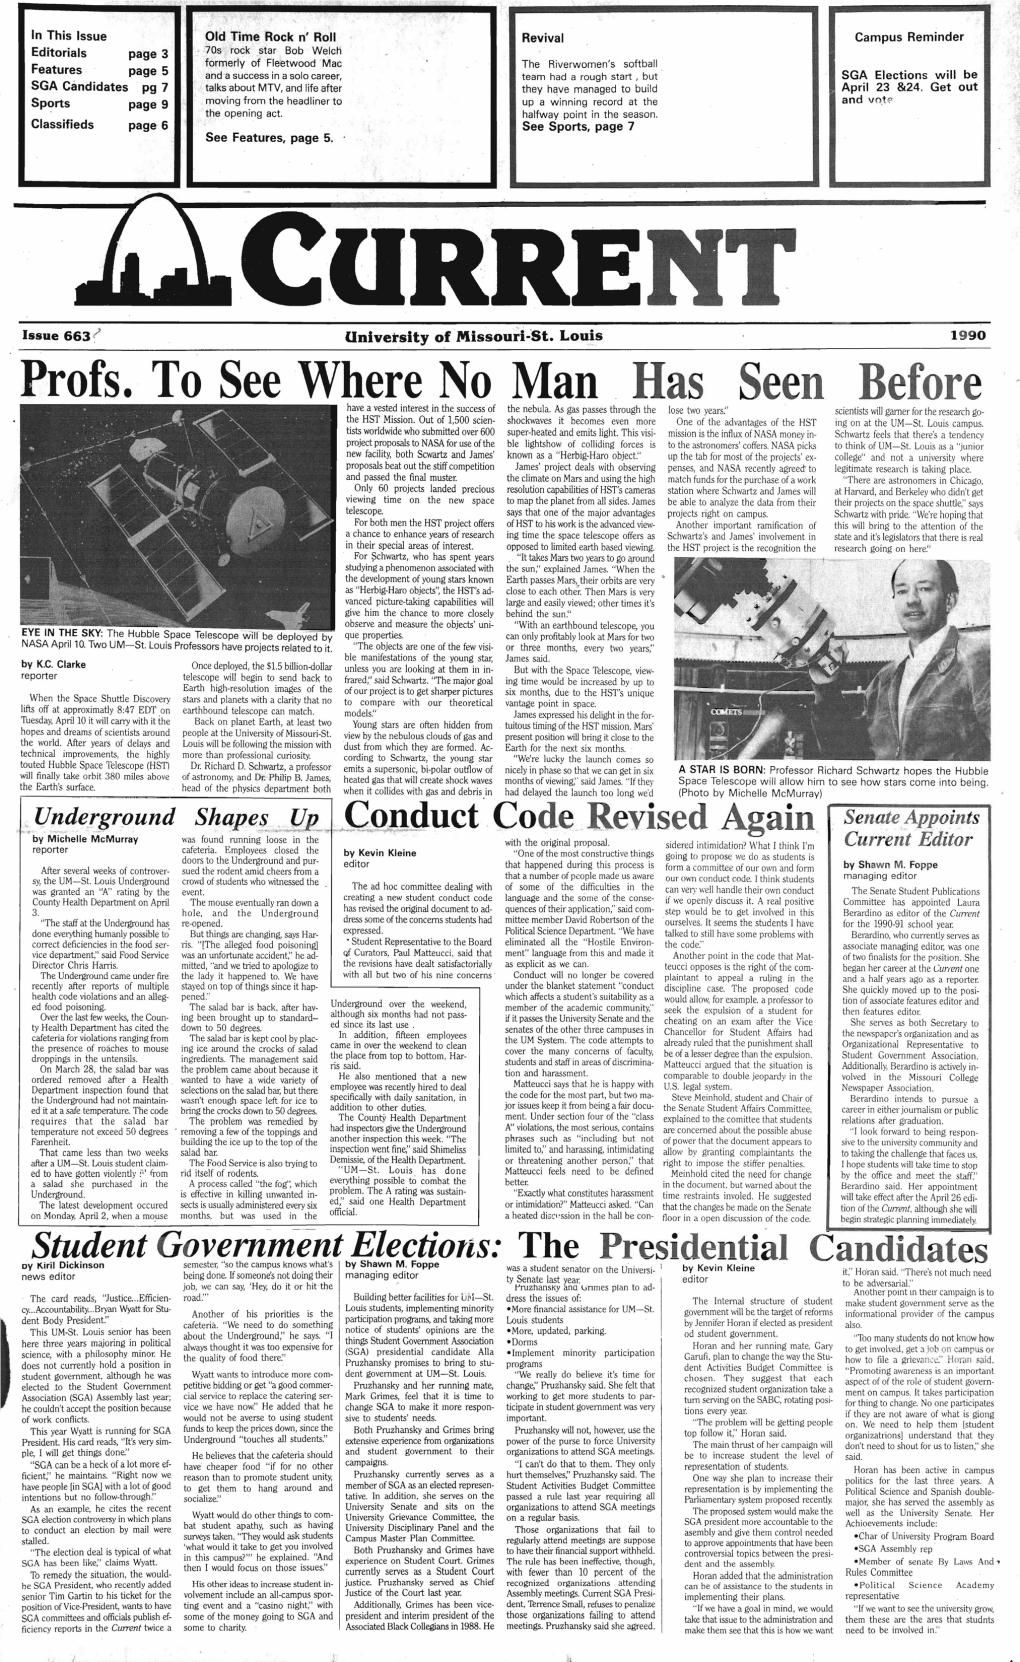 April 5, 1990 CURRENT Page 2